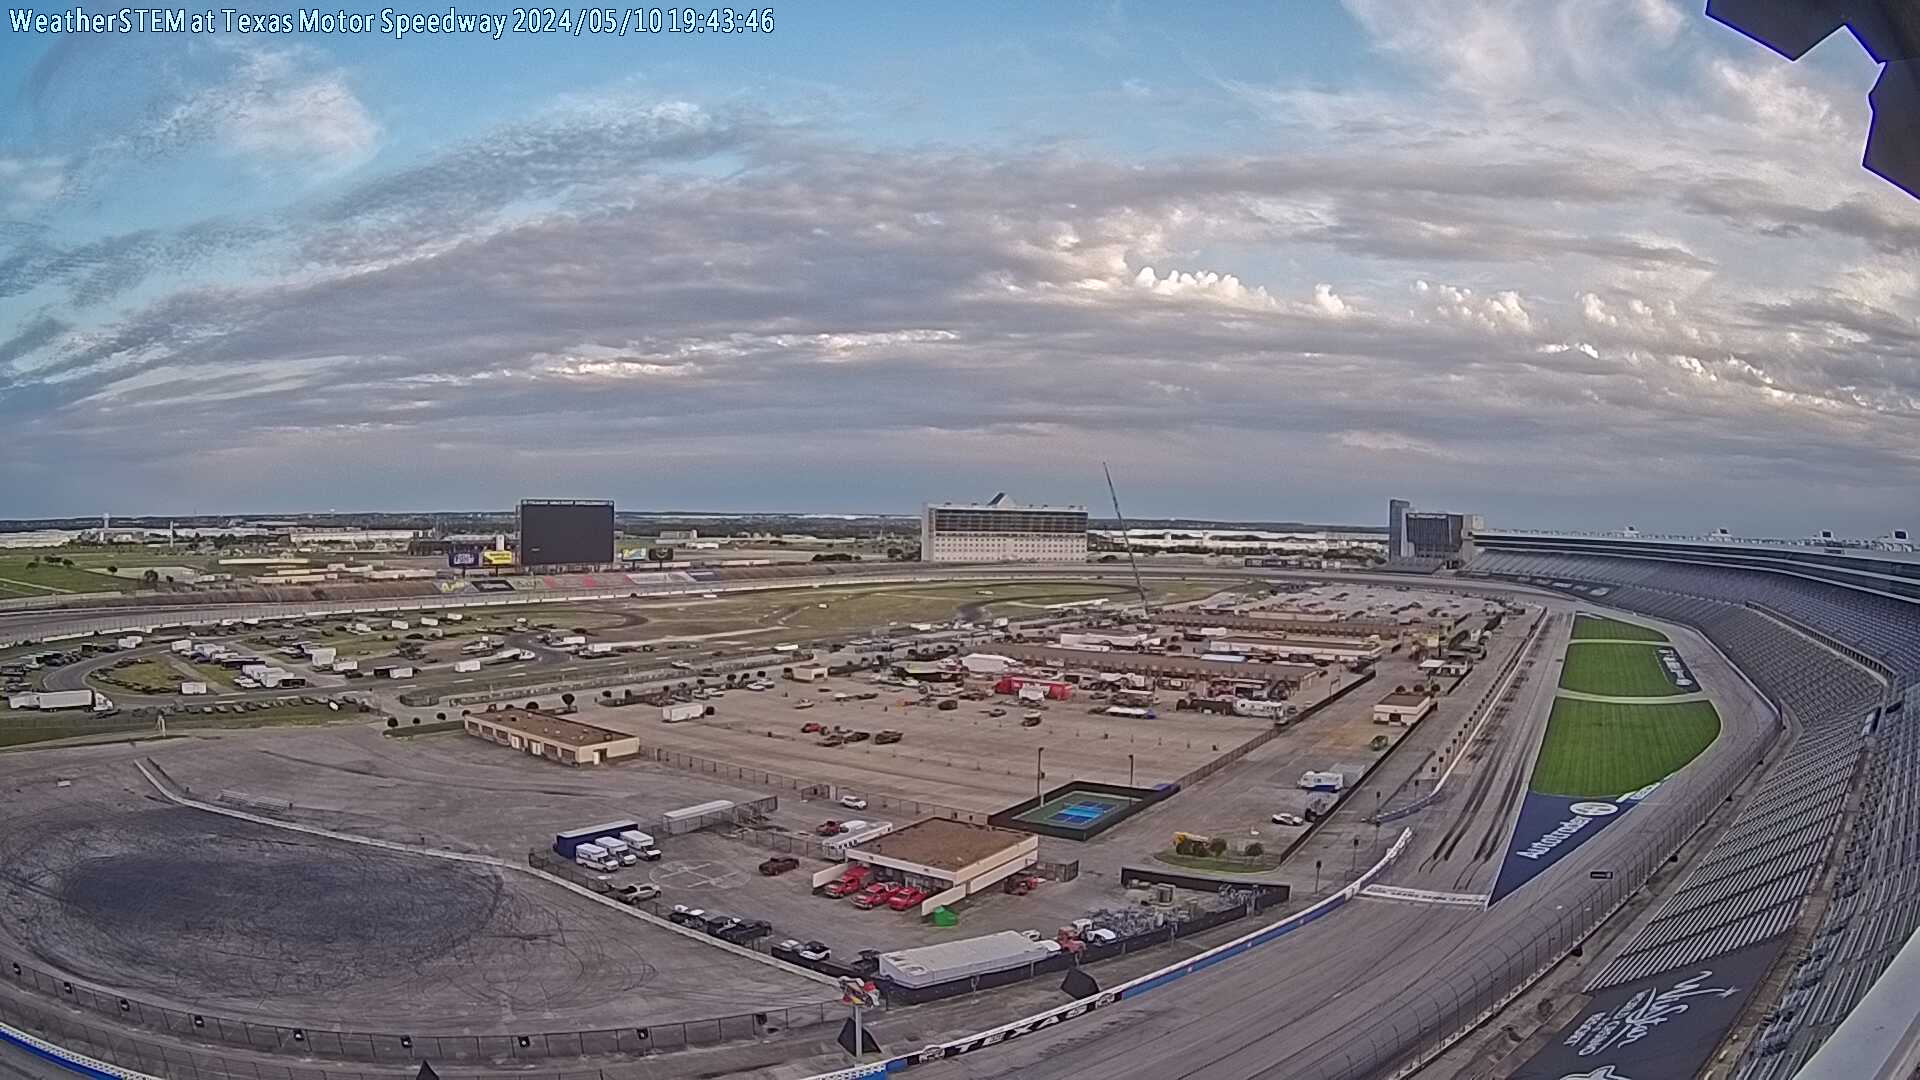  WeatherSTEM Cloud Camera TXSpeedwayWx in Denton County, Texas TX at Texas Motor Speedway